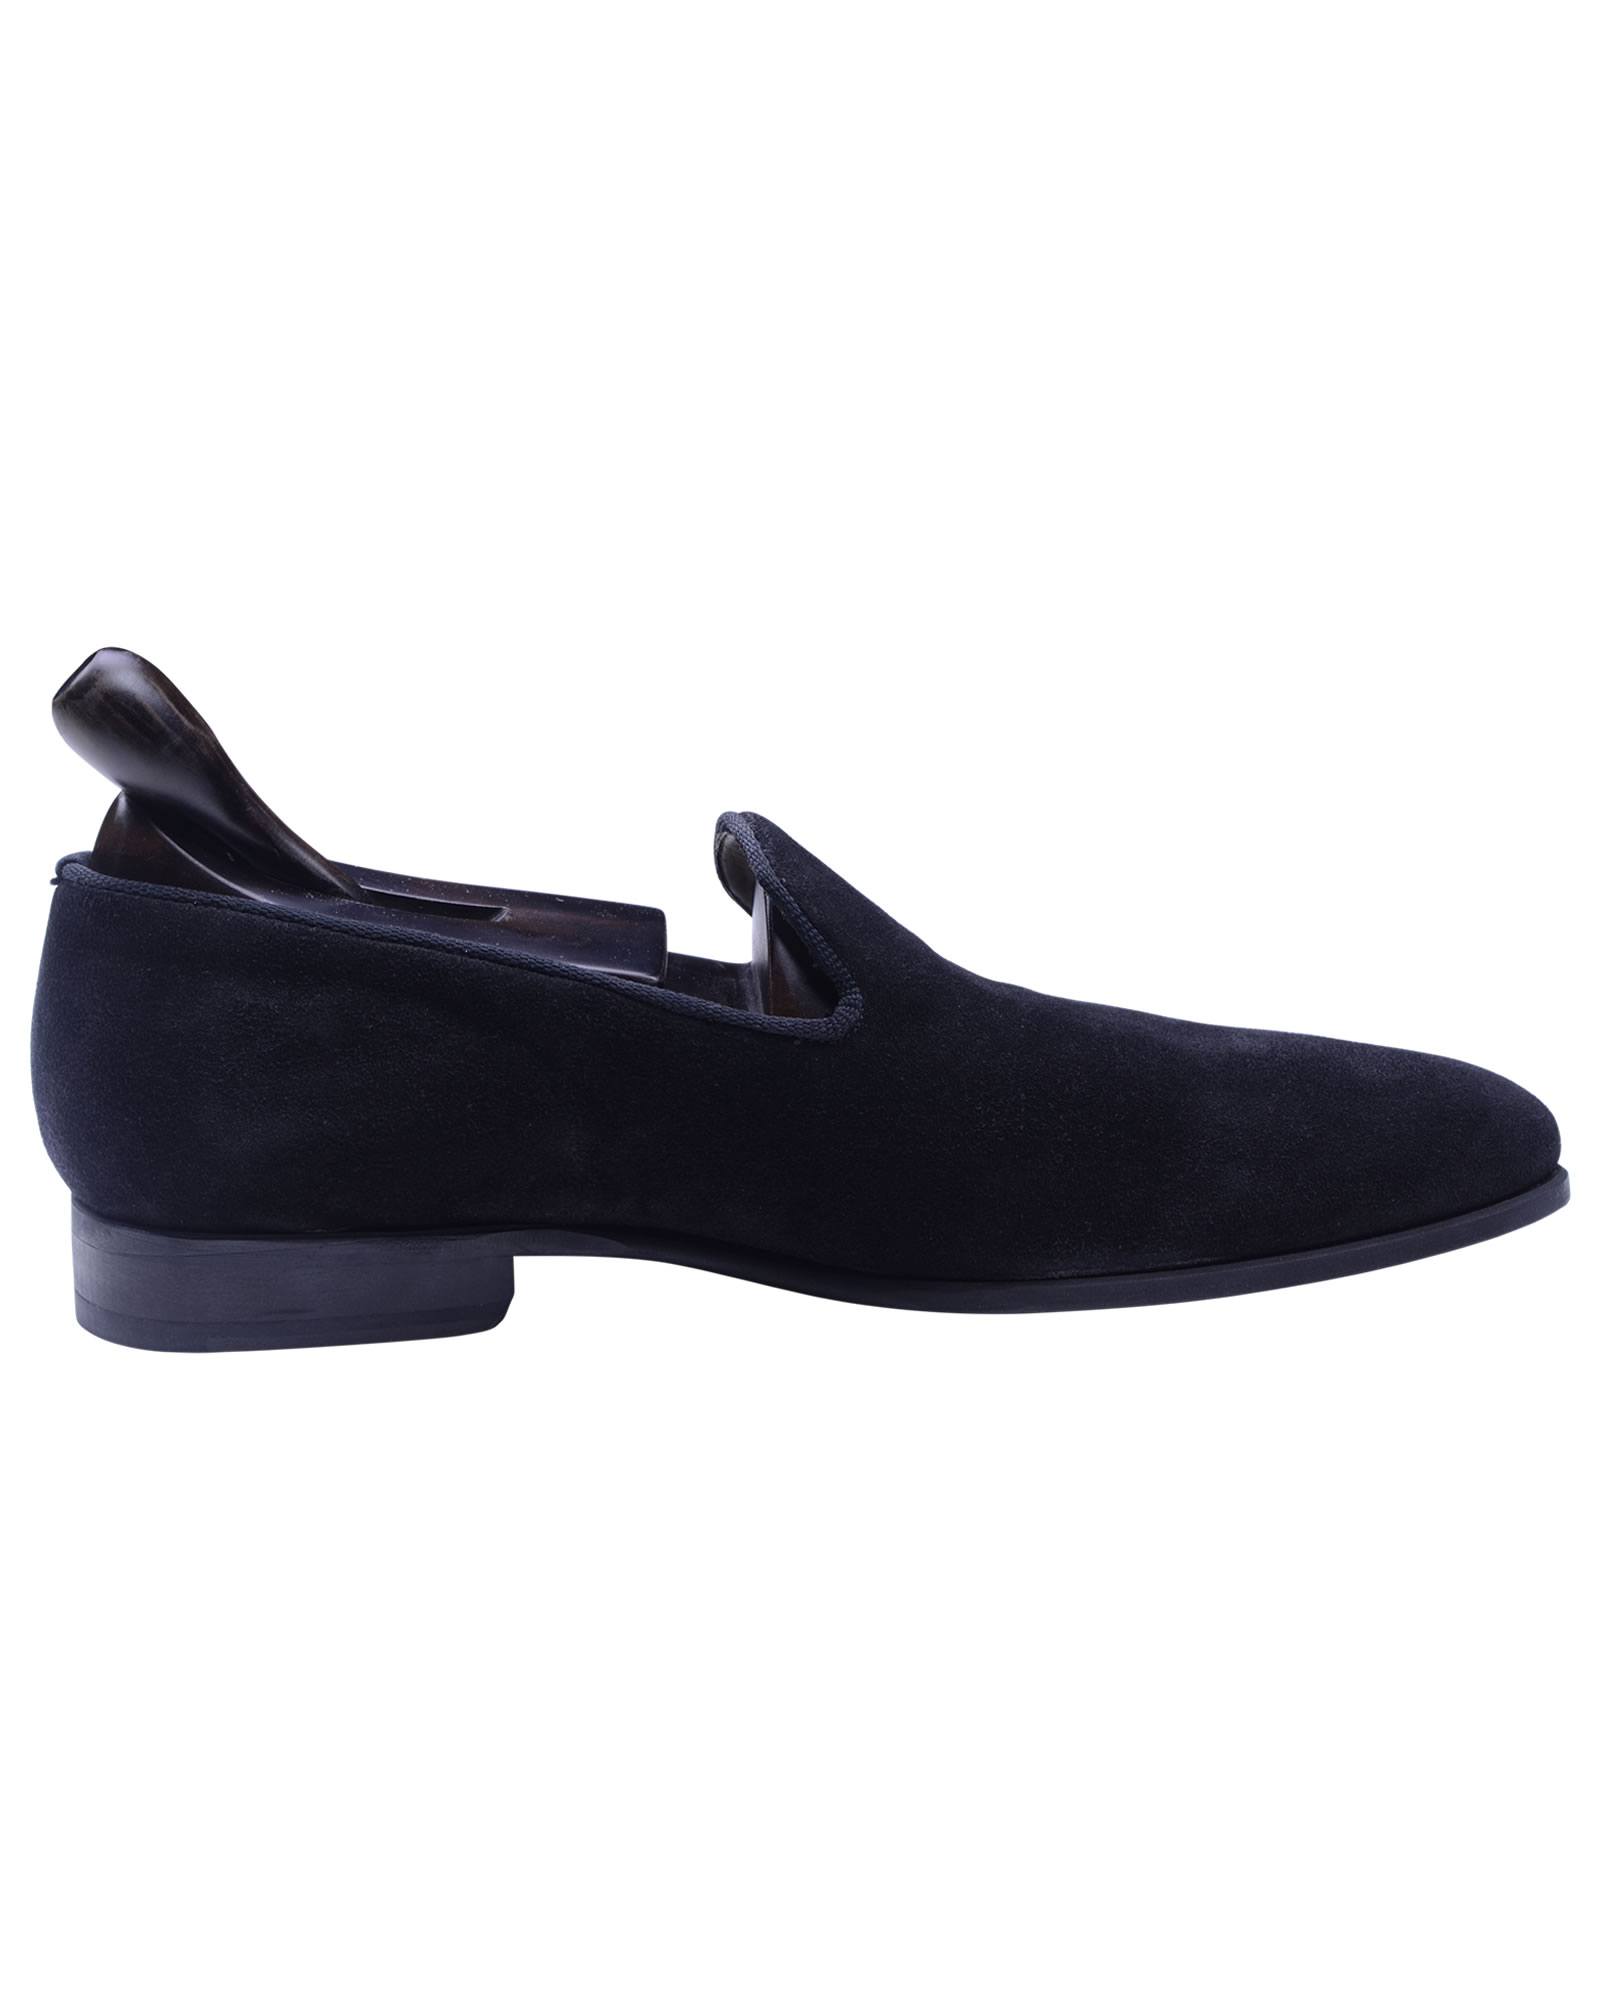 Corneliani Black Suede Men's Loafer shoes